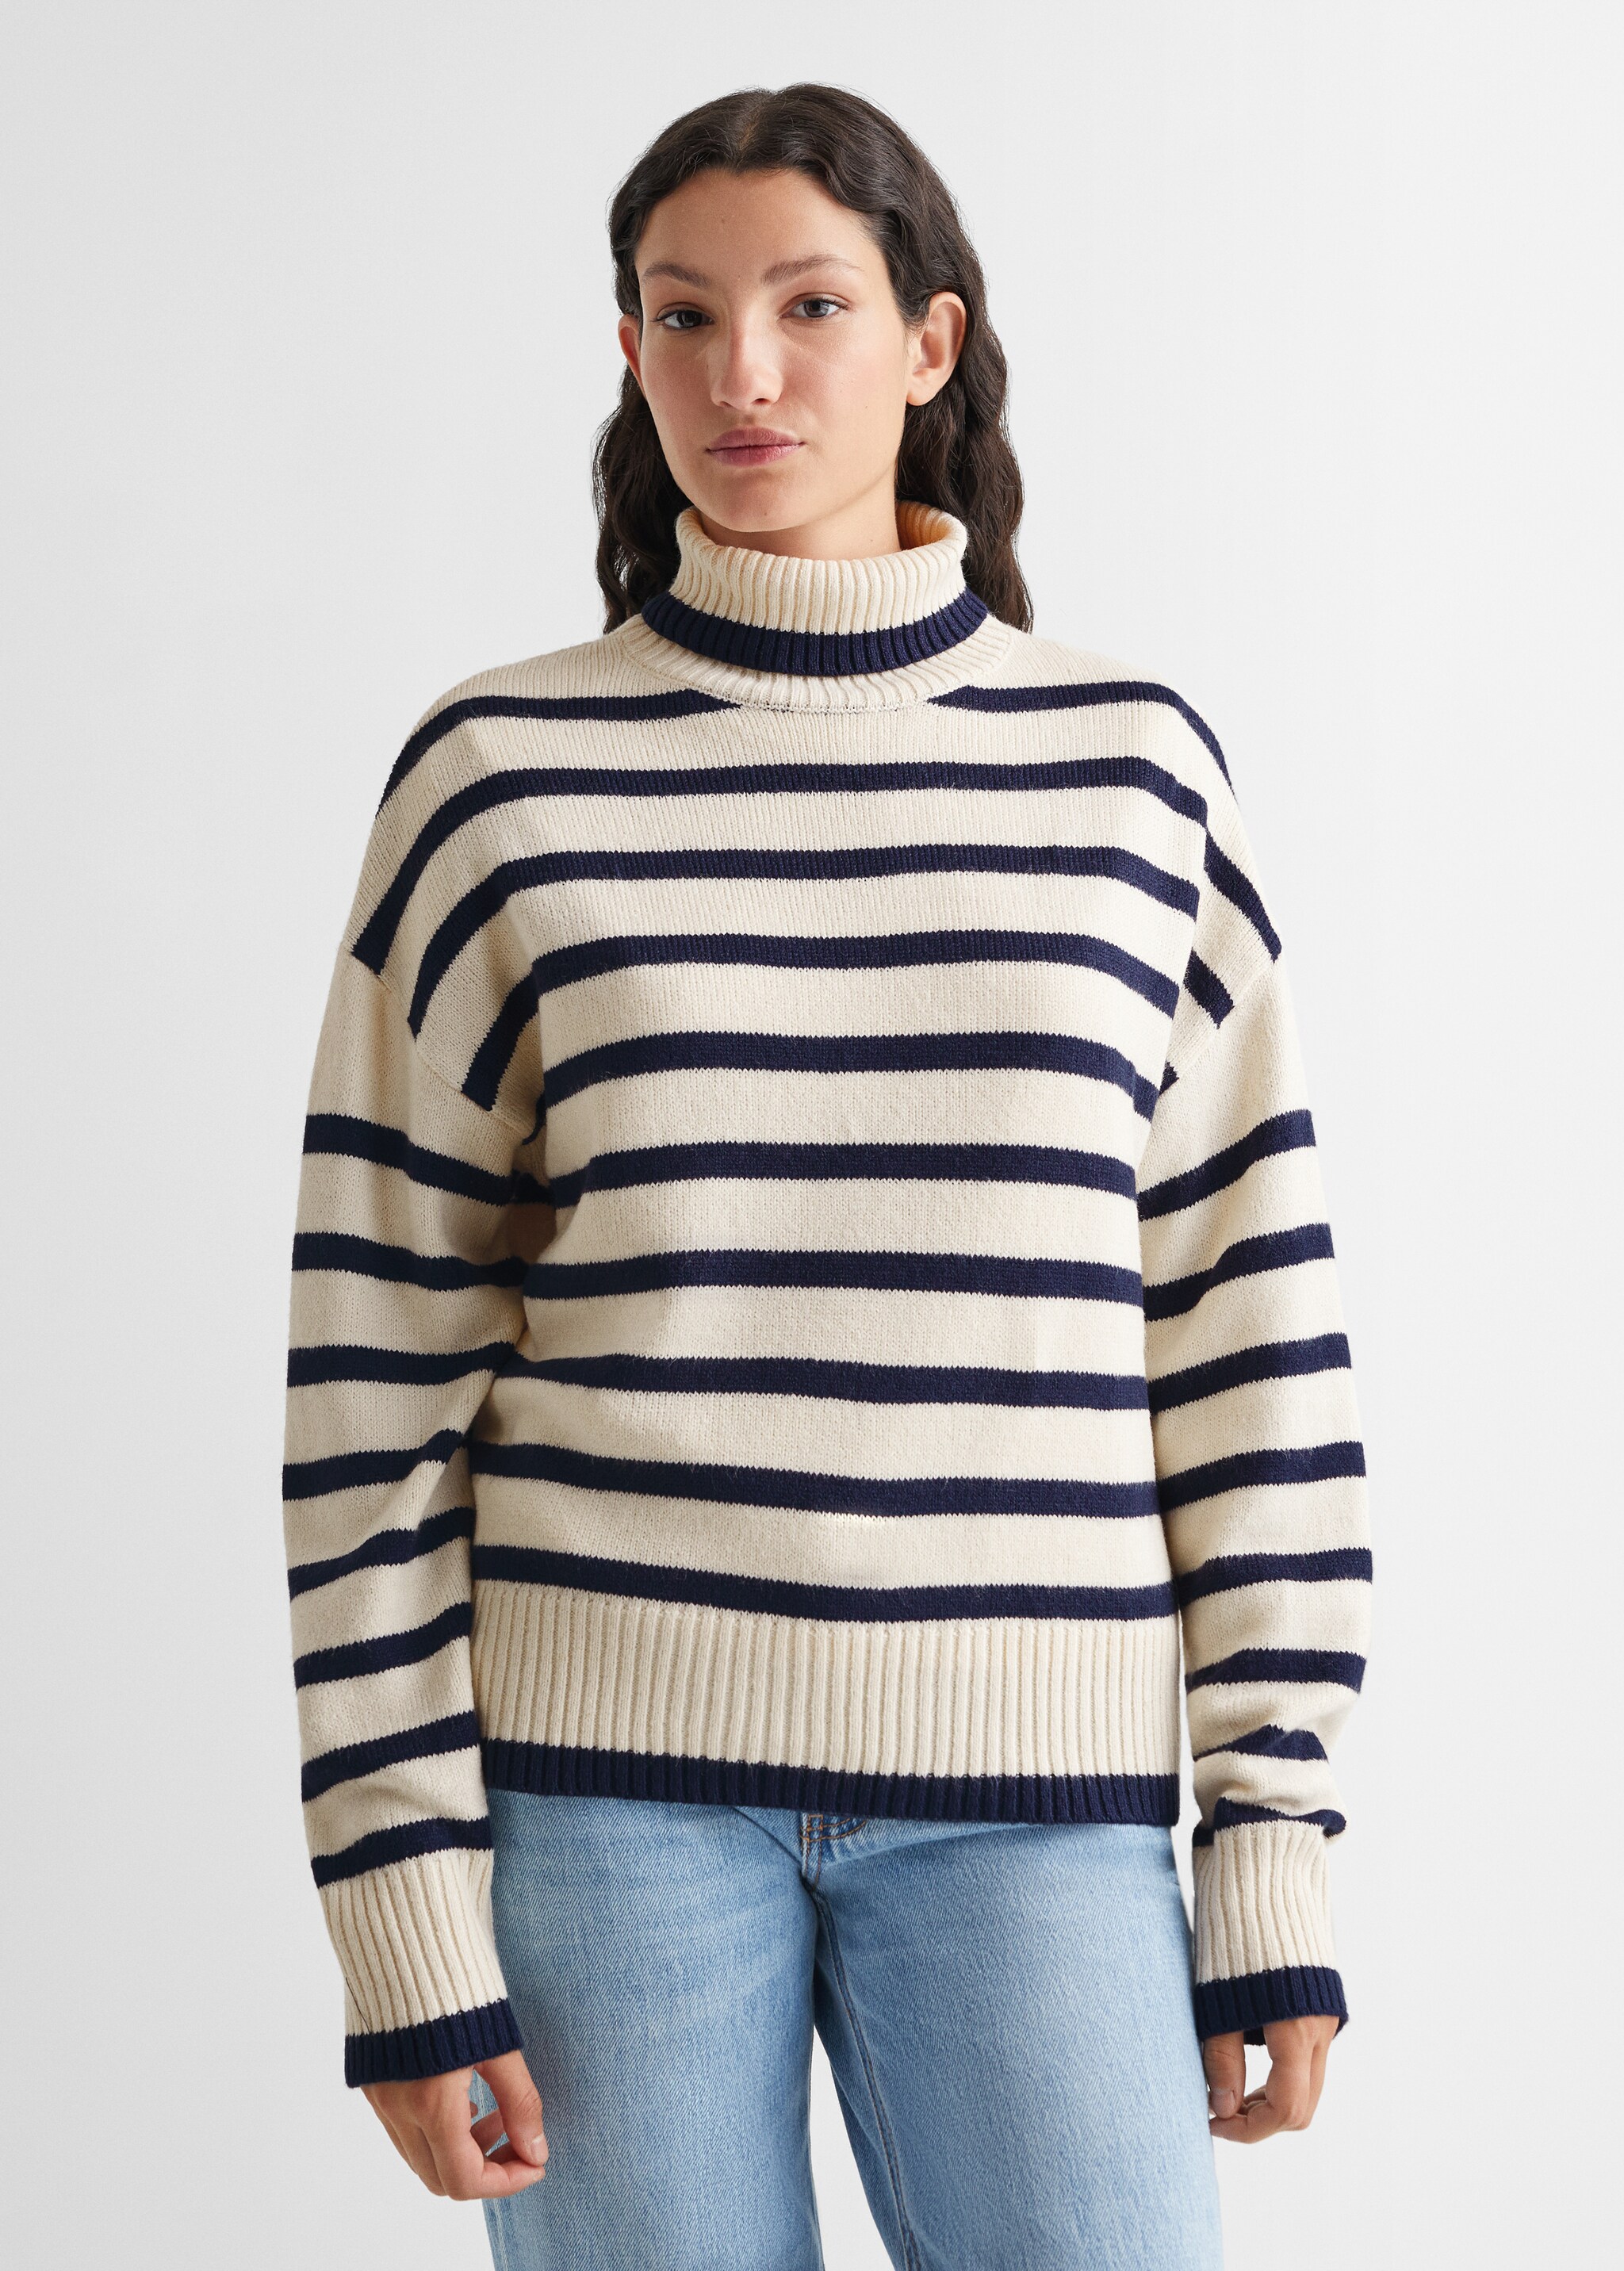 Stand-collar striped sweater - Middenvlak